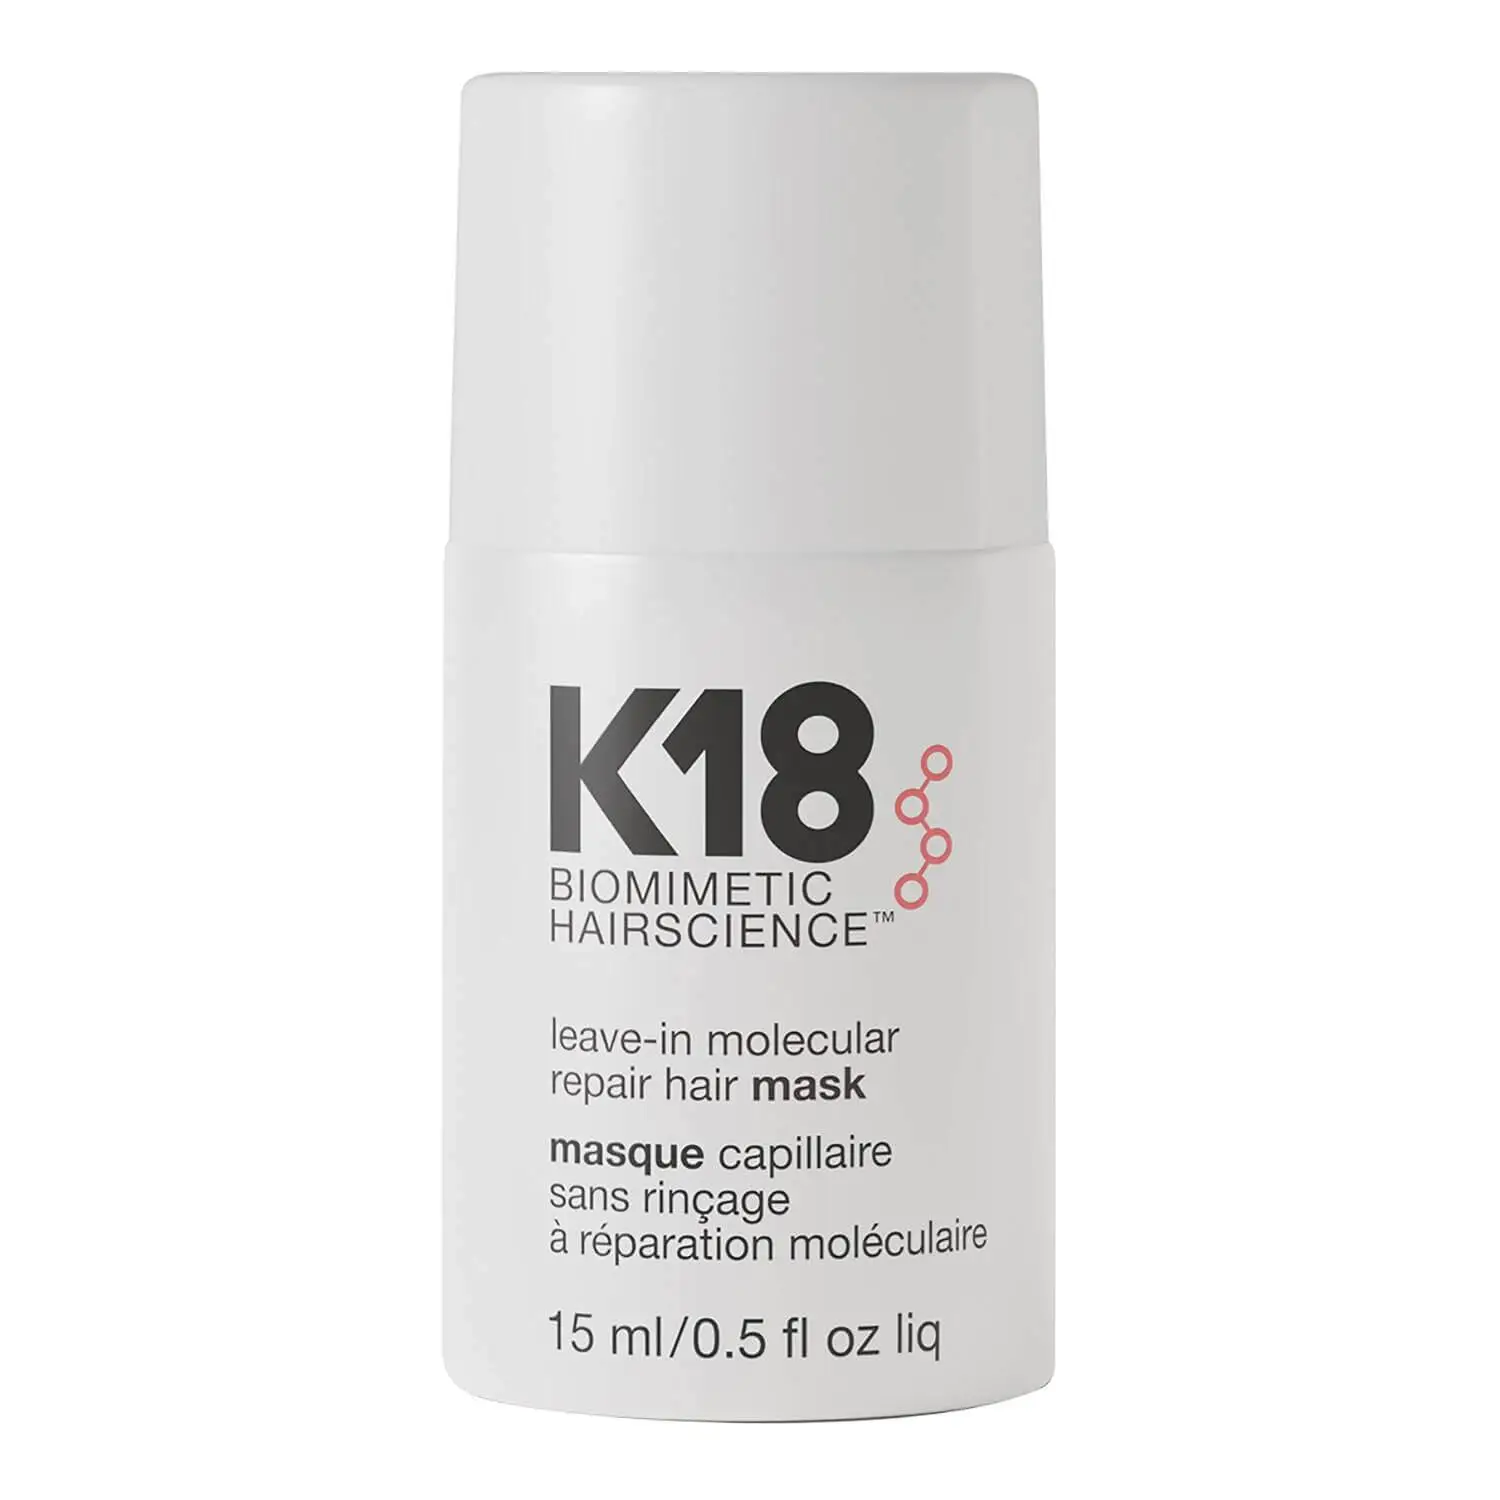 K18 Leave-in Molecular Repair Hair Mask 15ml Discounts and Cashback